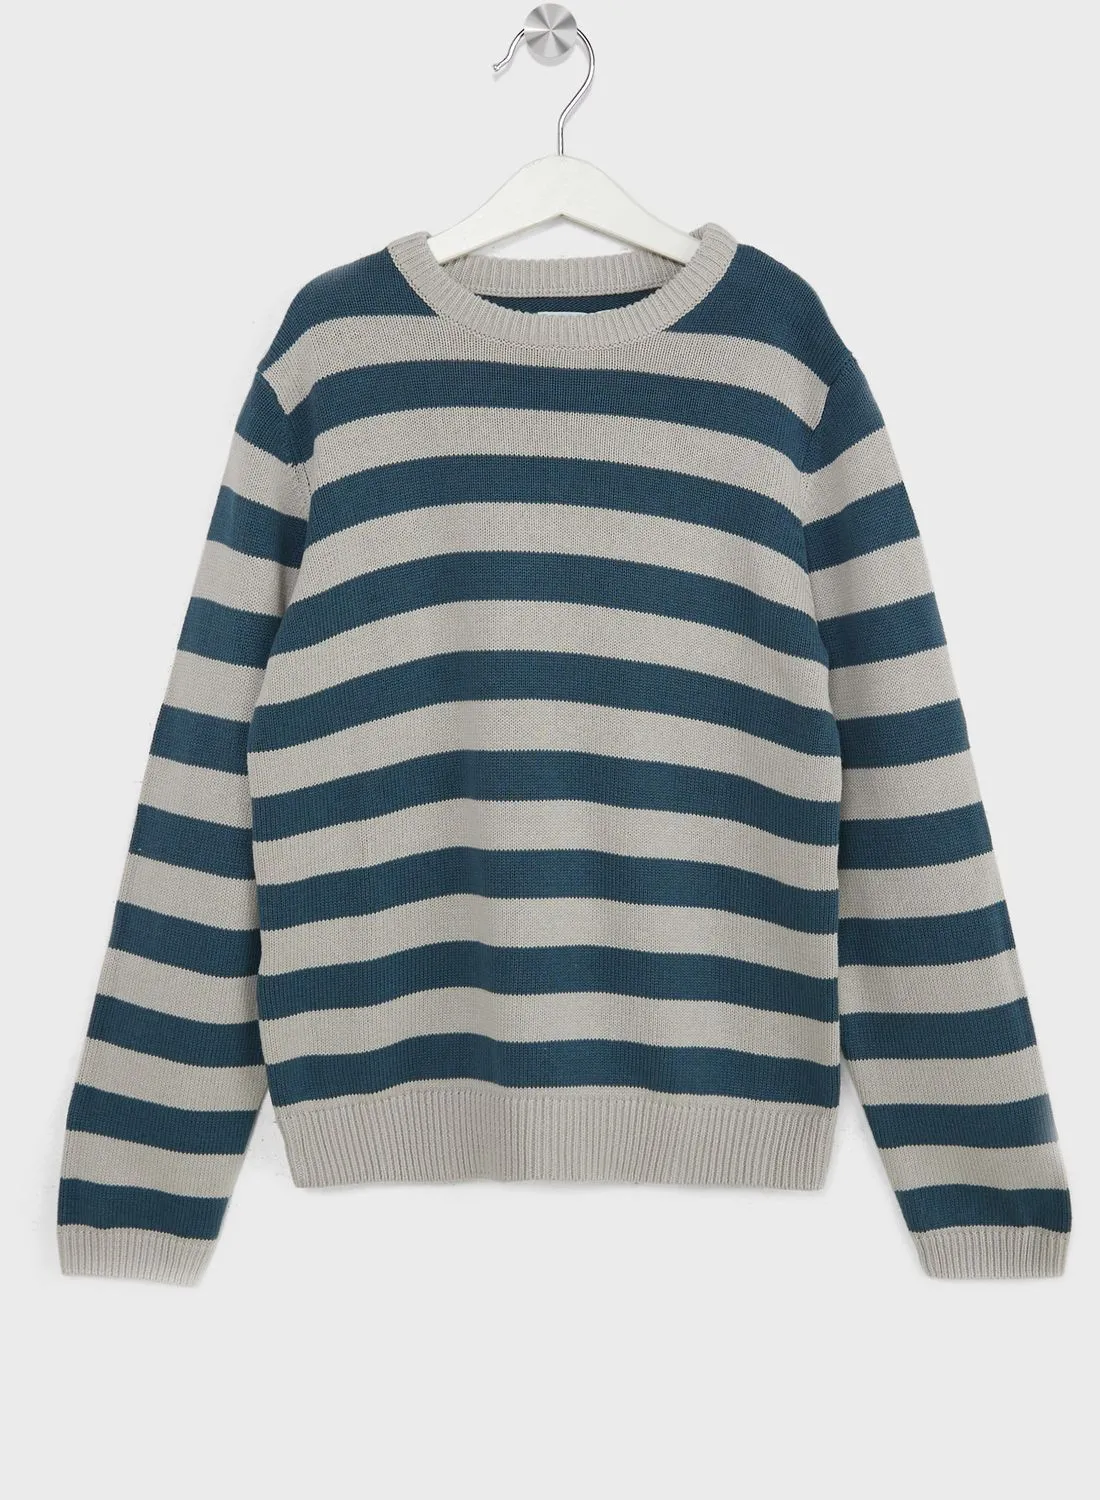 MANGO Kids Striped Sweater